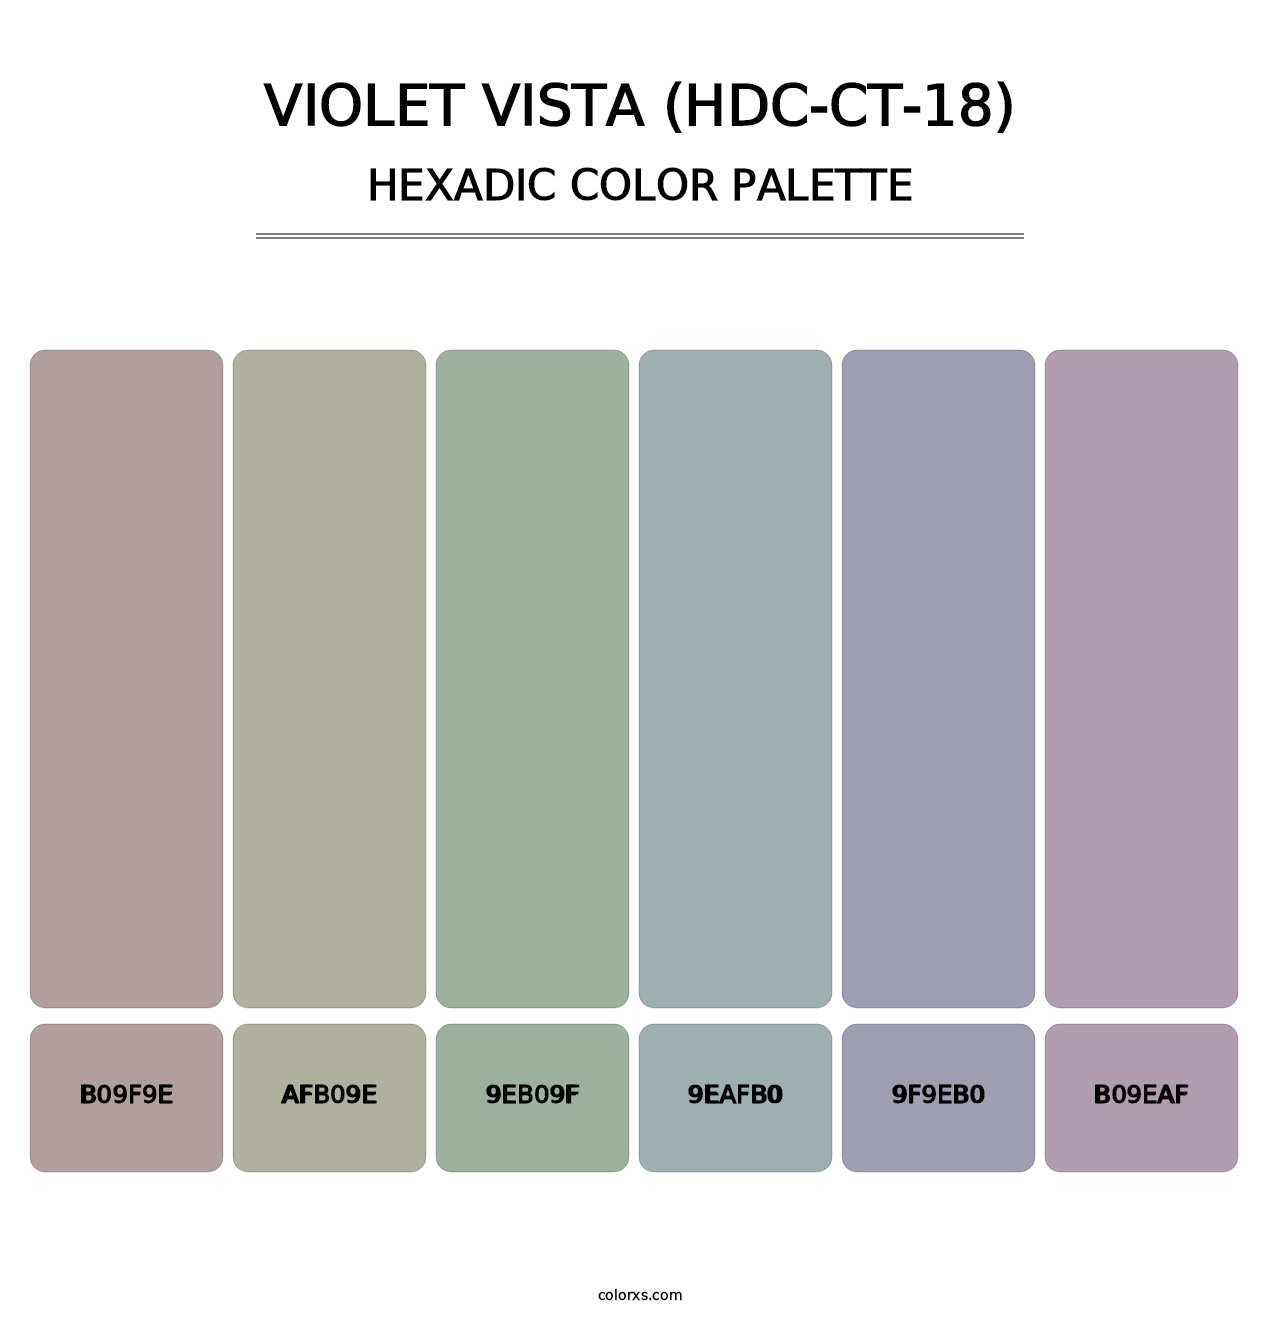 Violet Vista (HDC-CT-18) - Hexadic Color Palette